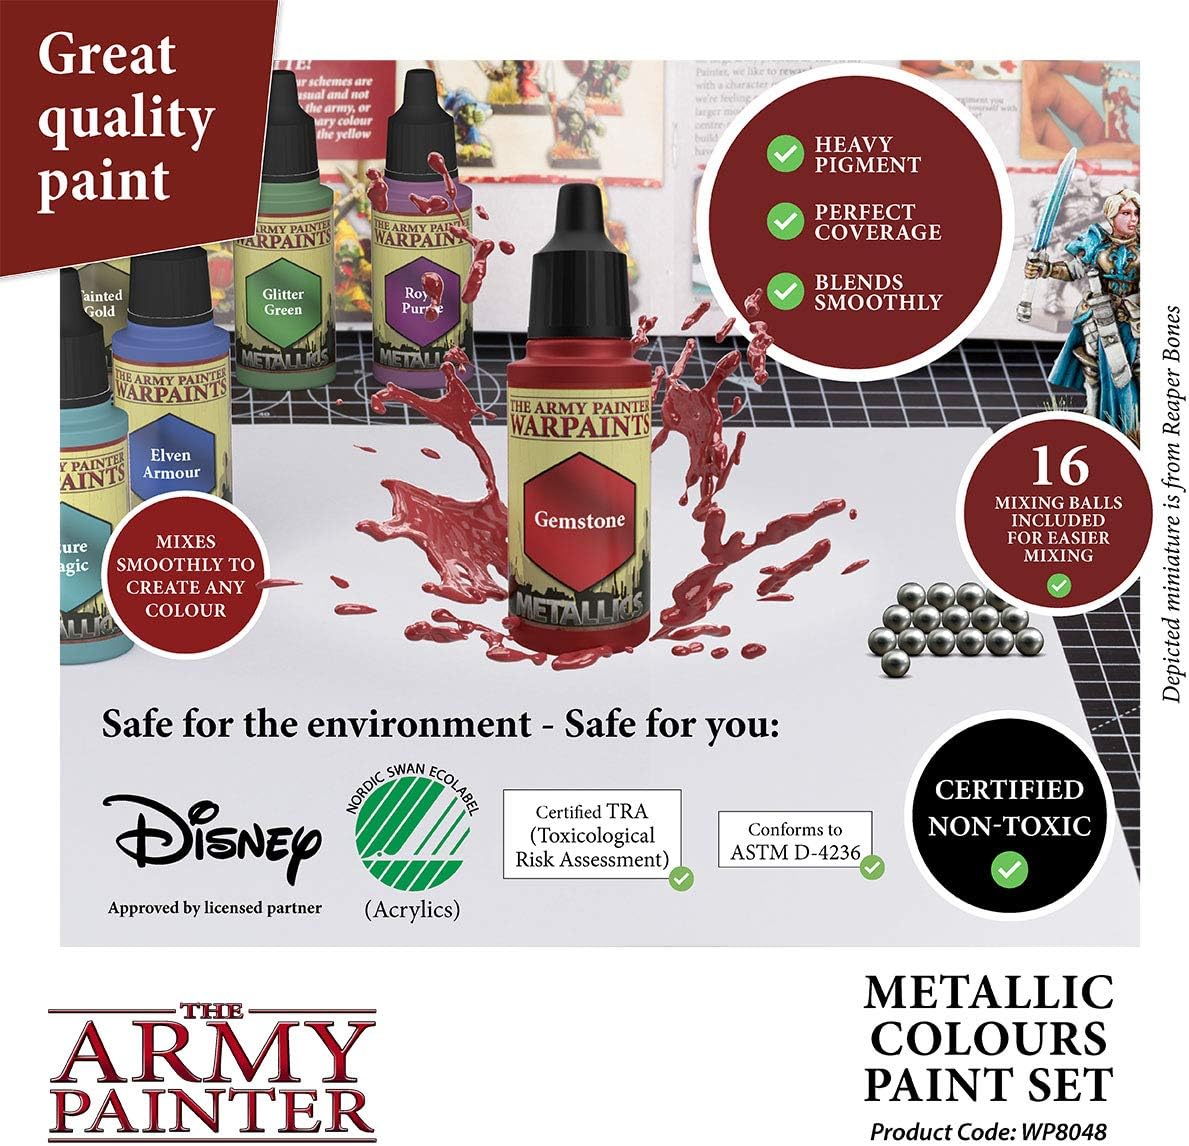 The Army Painter - Metallic Colours Paint Set - Hobby Acrylic Paint Set of 10 Metallic Acrylic Paint - Includes Tainted Gold Acrylic Paint Metallic - Acrylic Hobby Paint Set of Acrylic Metallic Paint